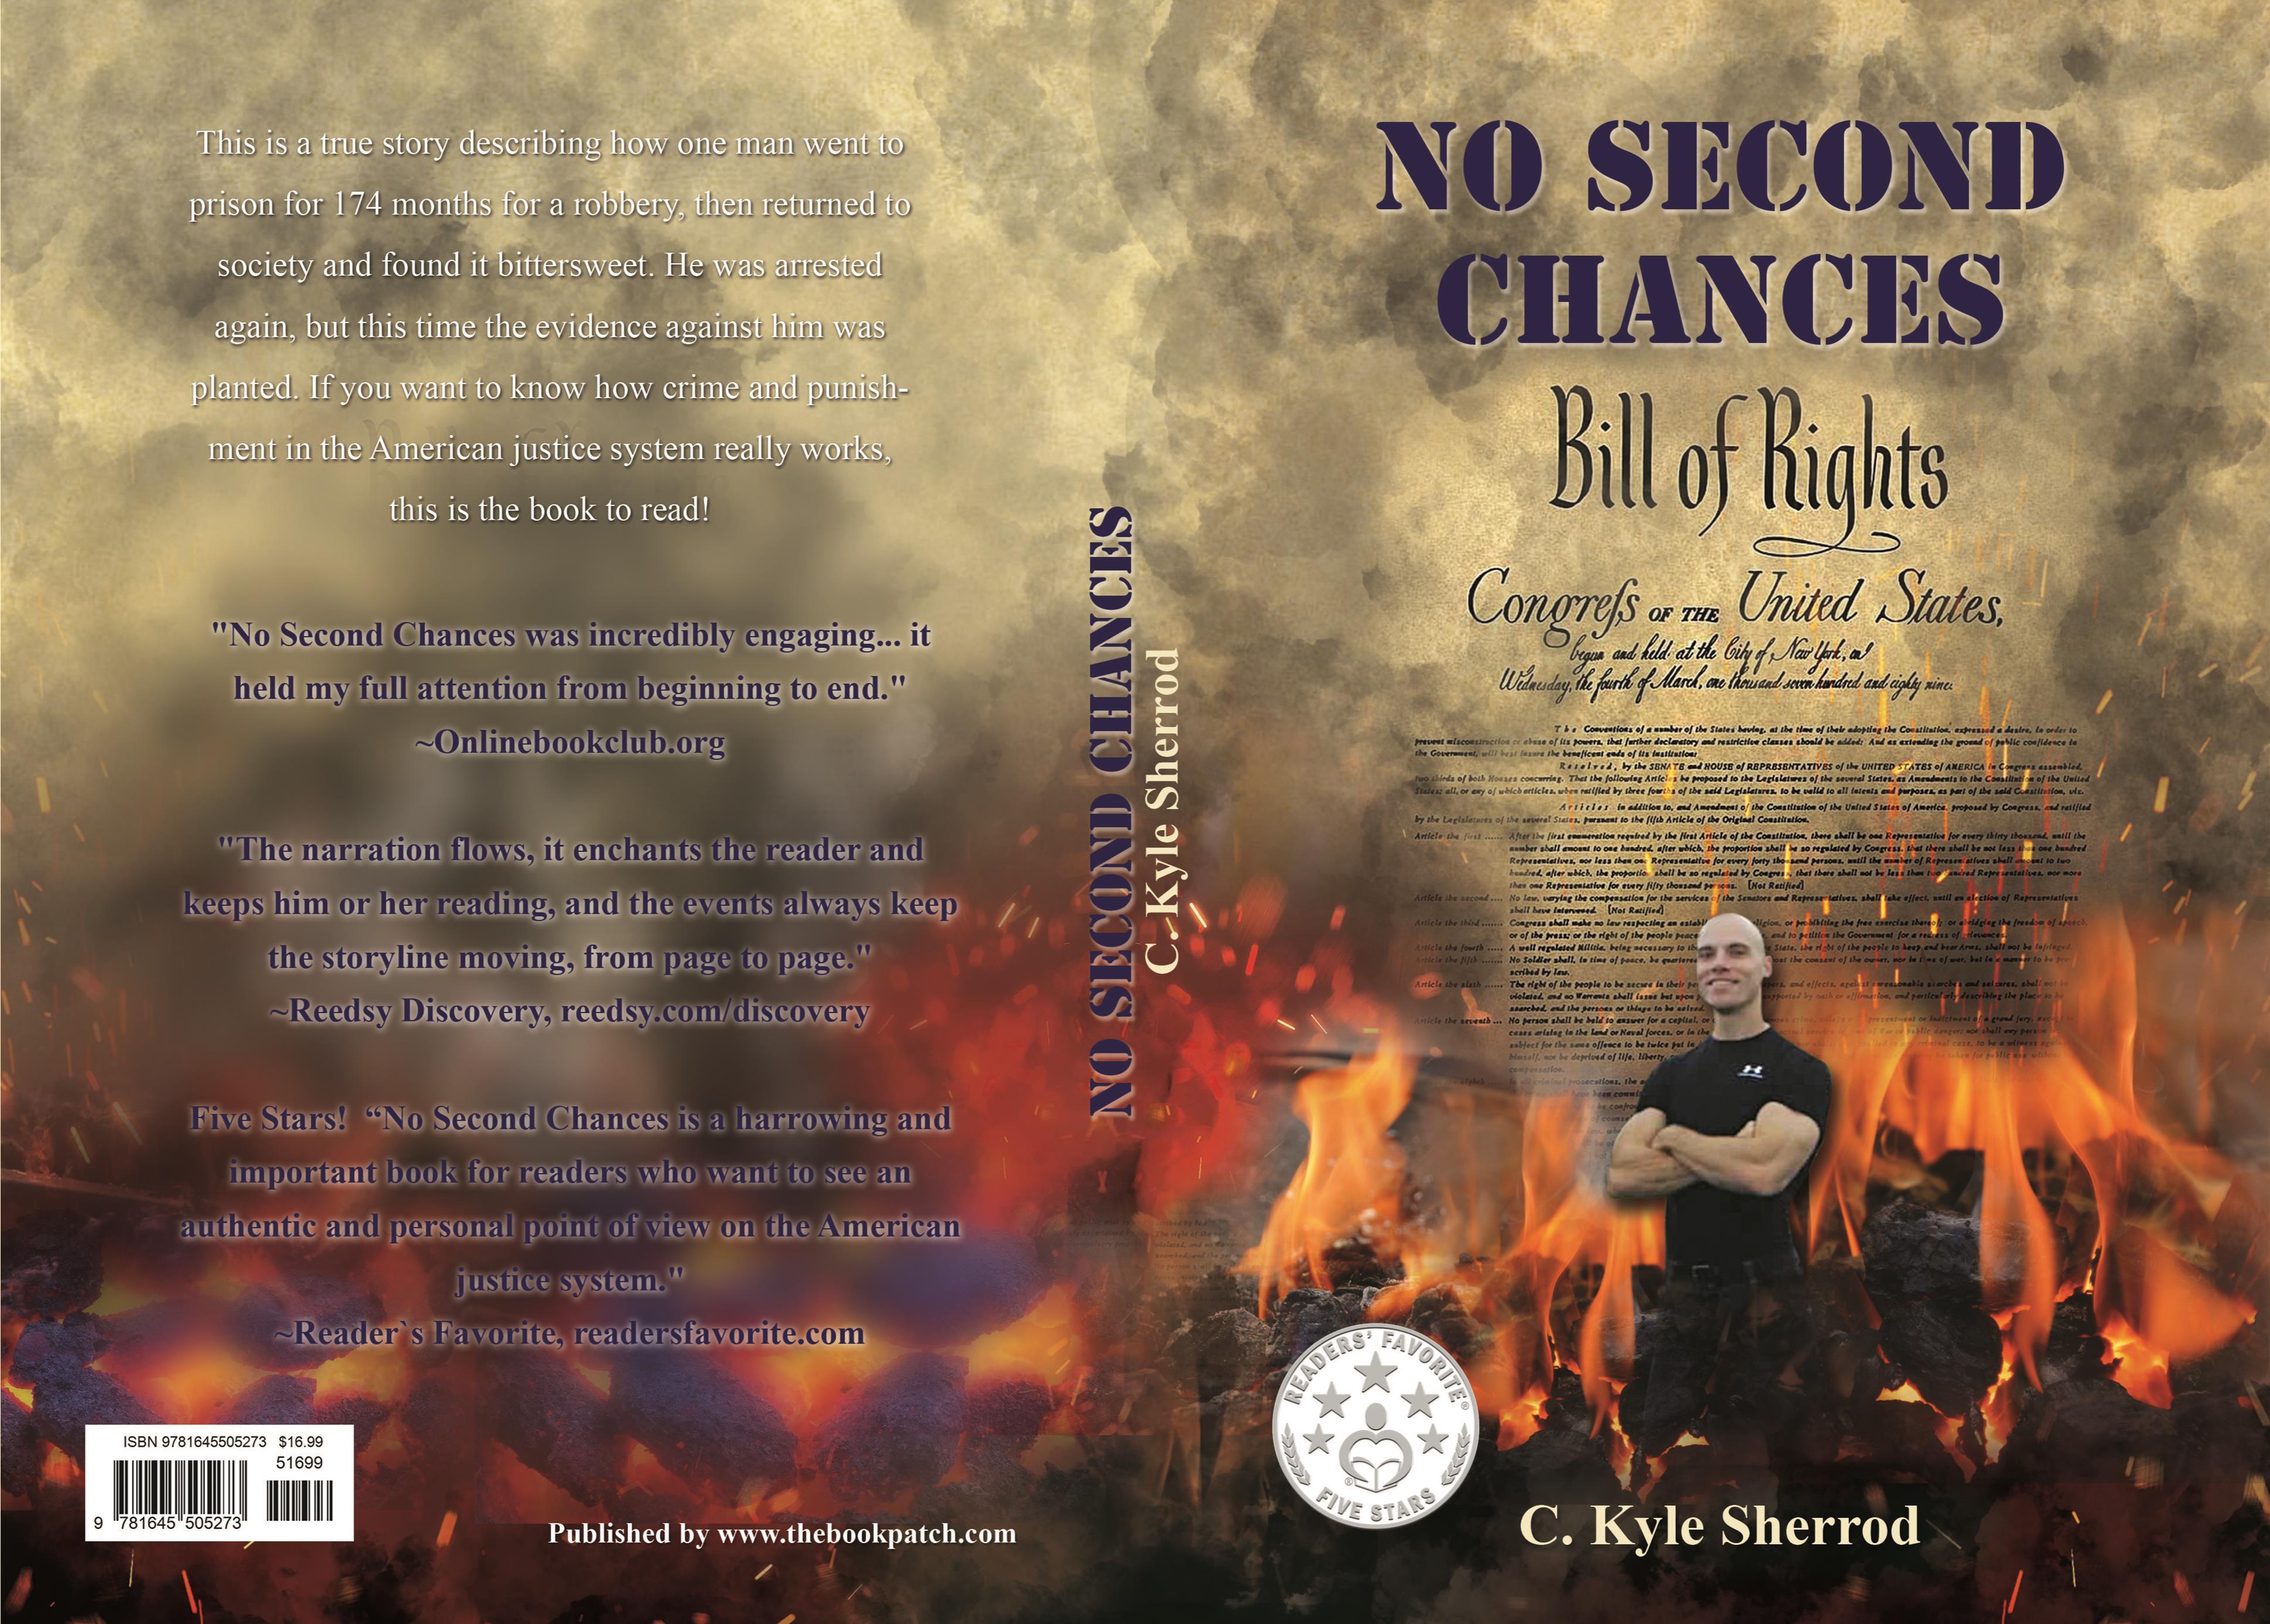 No Second Chances cover image